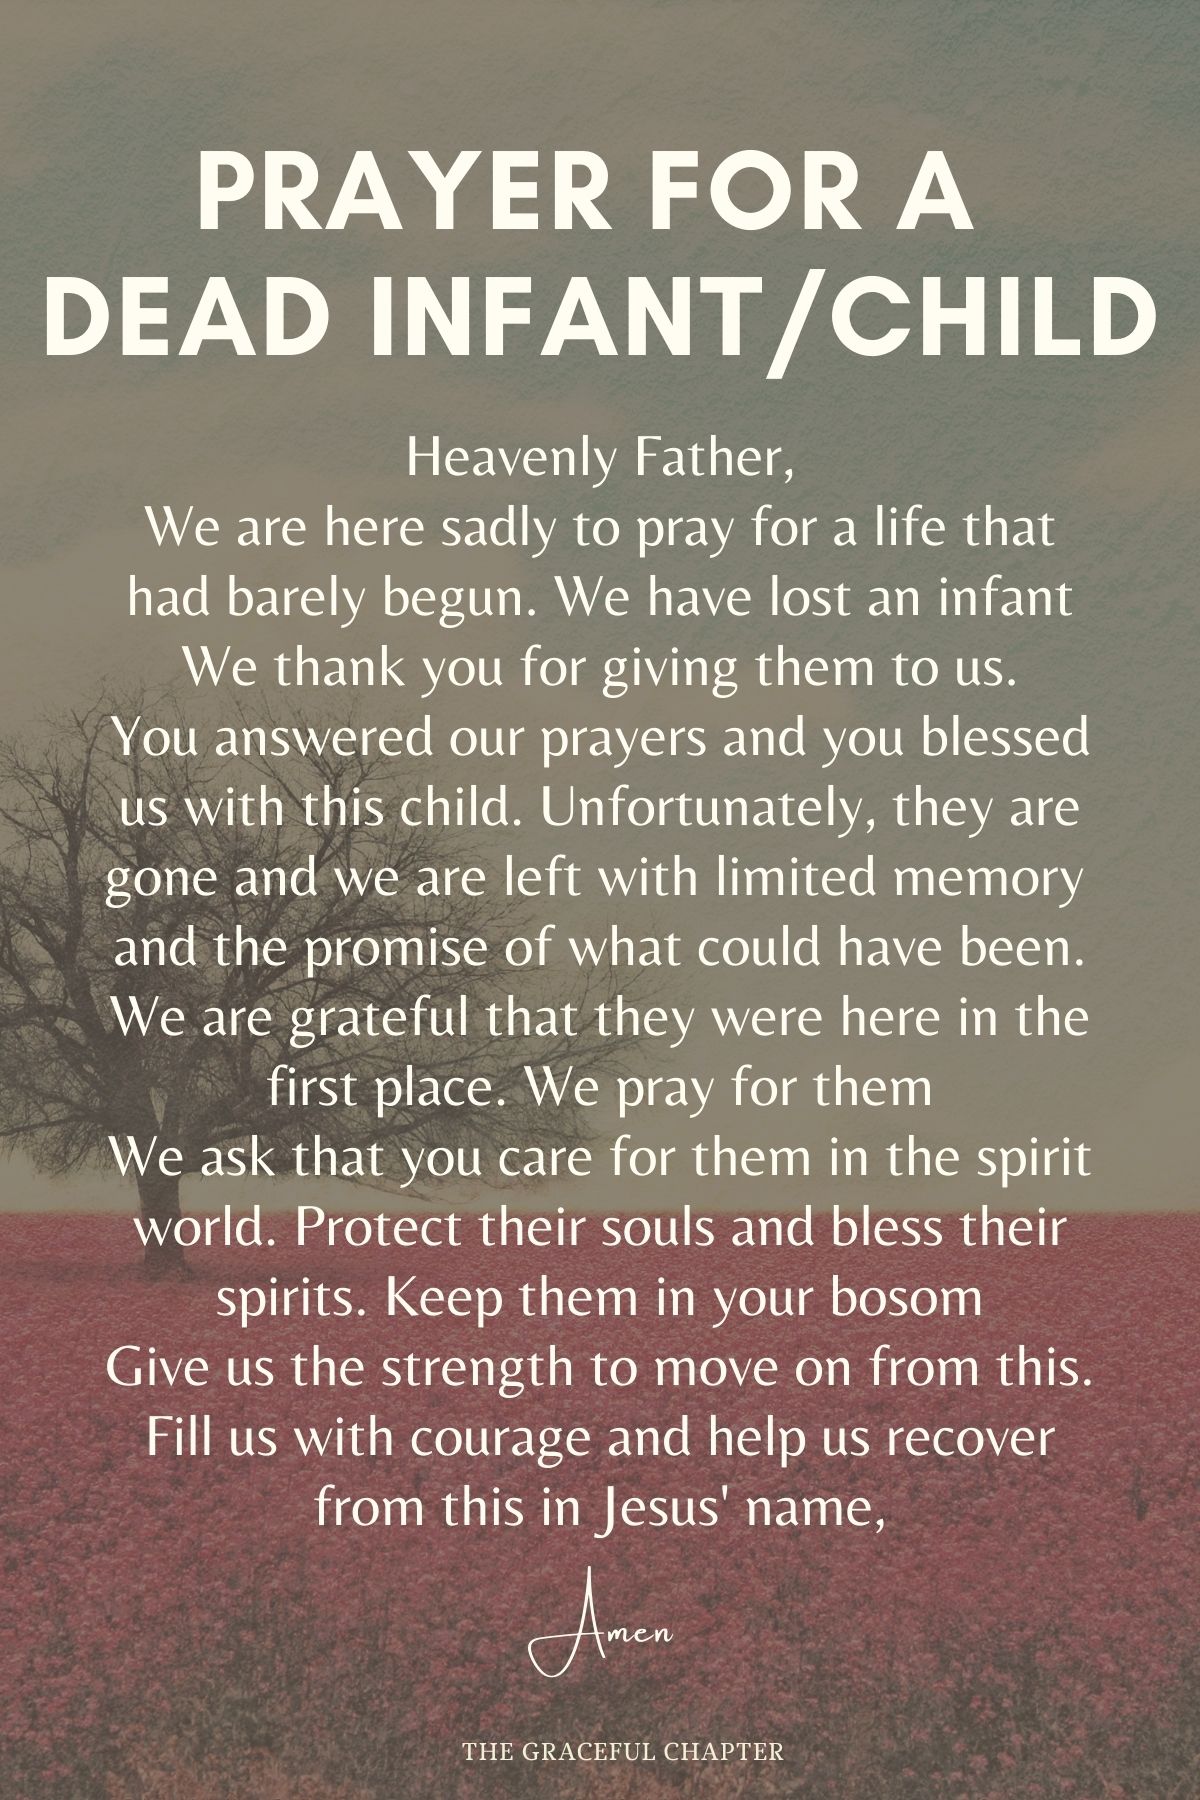 Prayer for a dead infant/child - prayers for the dead